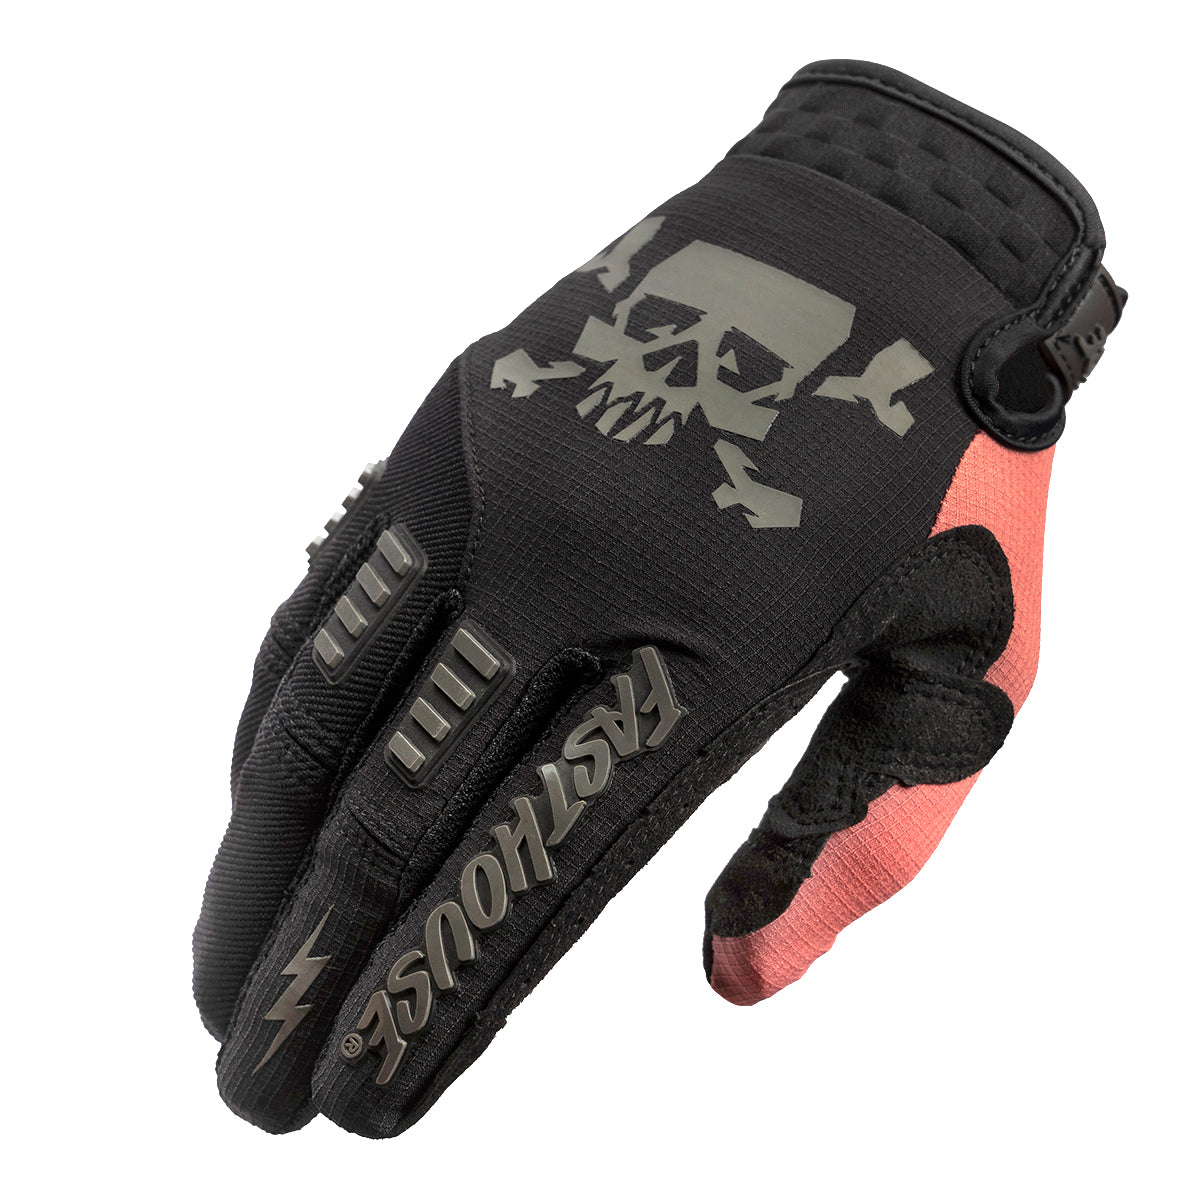 Speed Style Sand Cat Glove - Mauve/Black